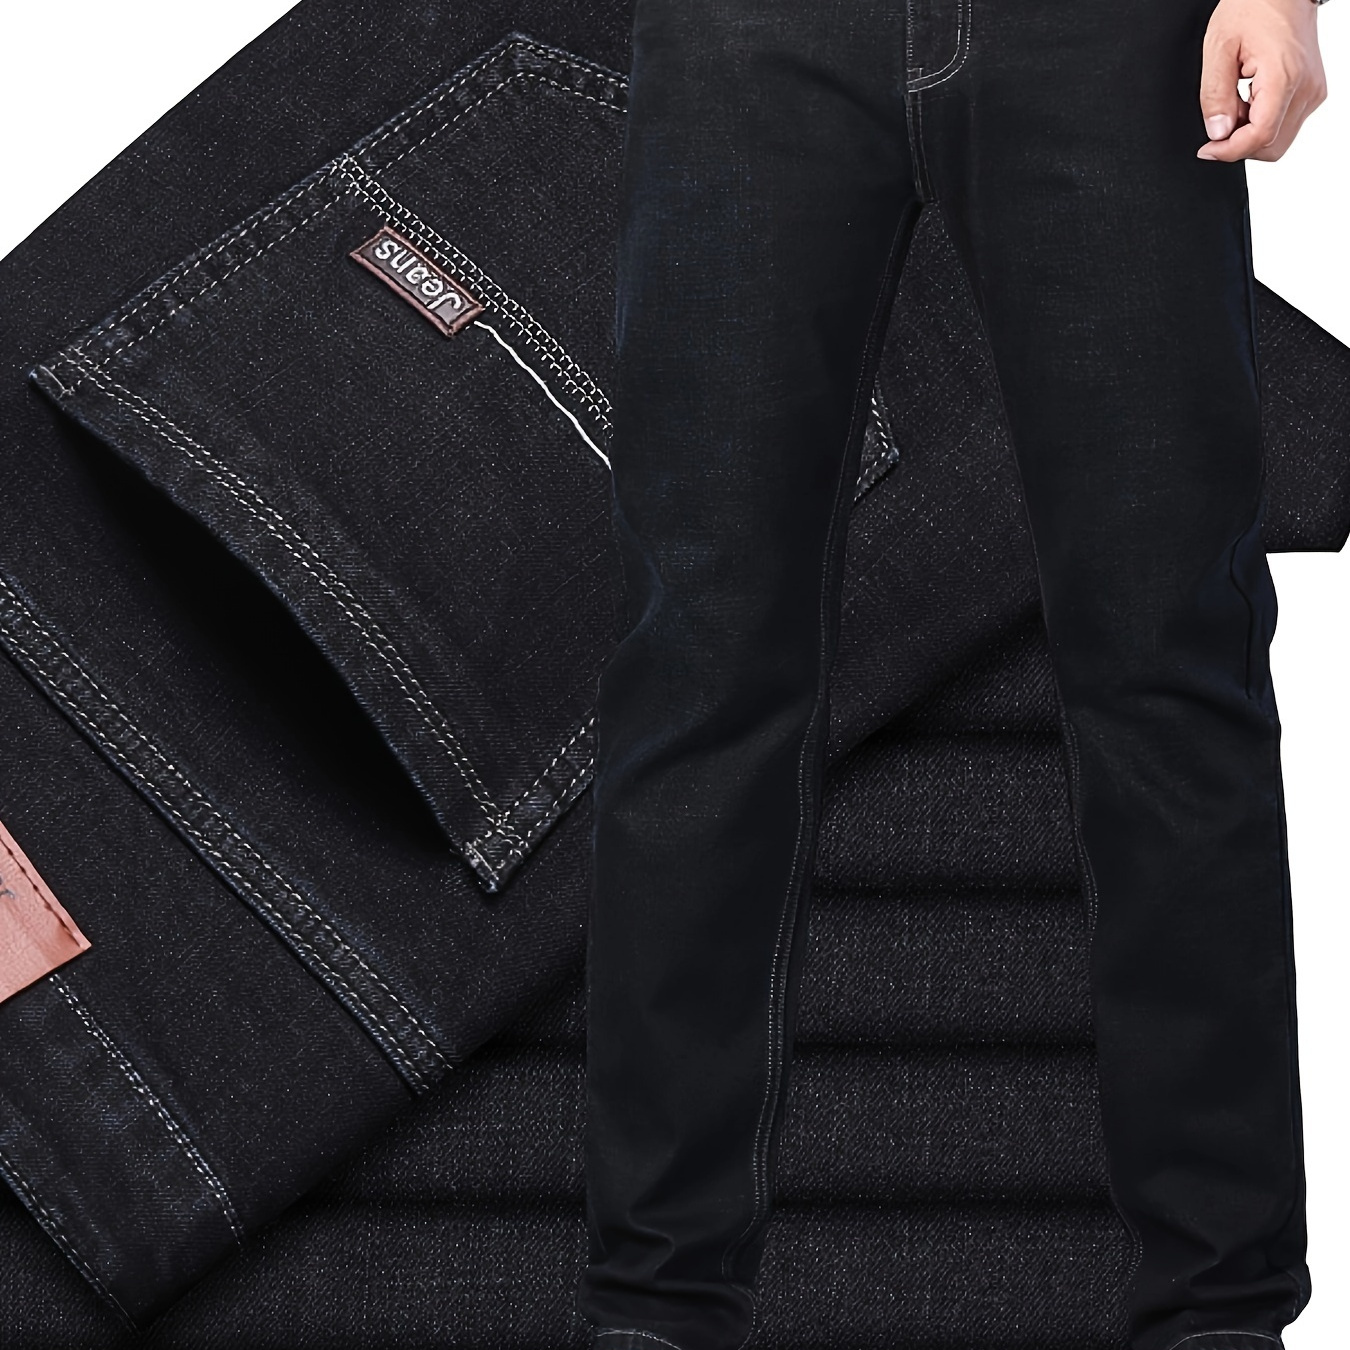 

Men's Semi-formal Jeans, Chic Classic Design Straight Leg Jeans For Business